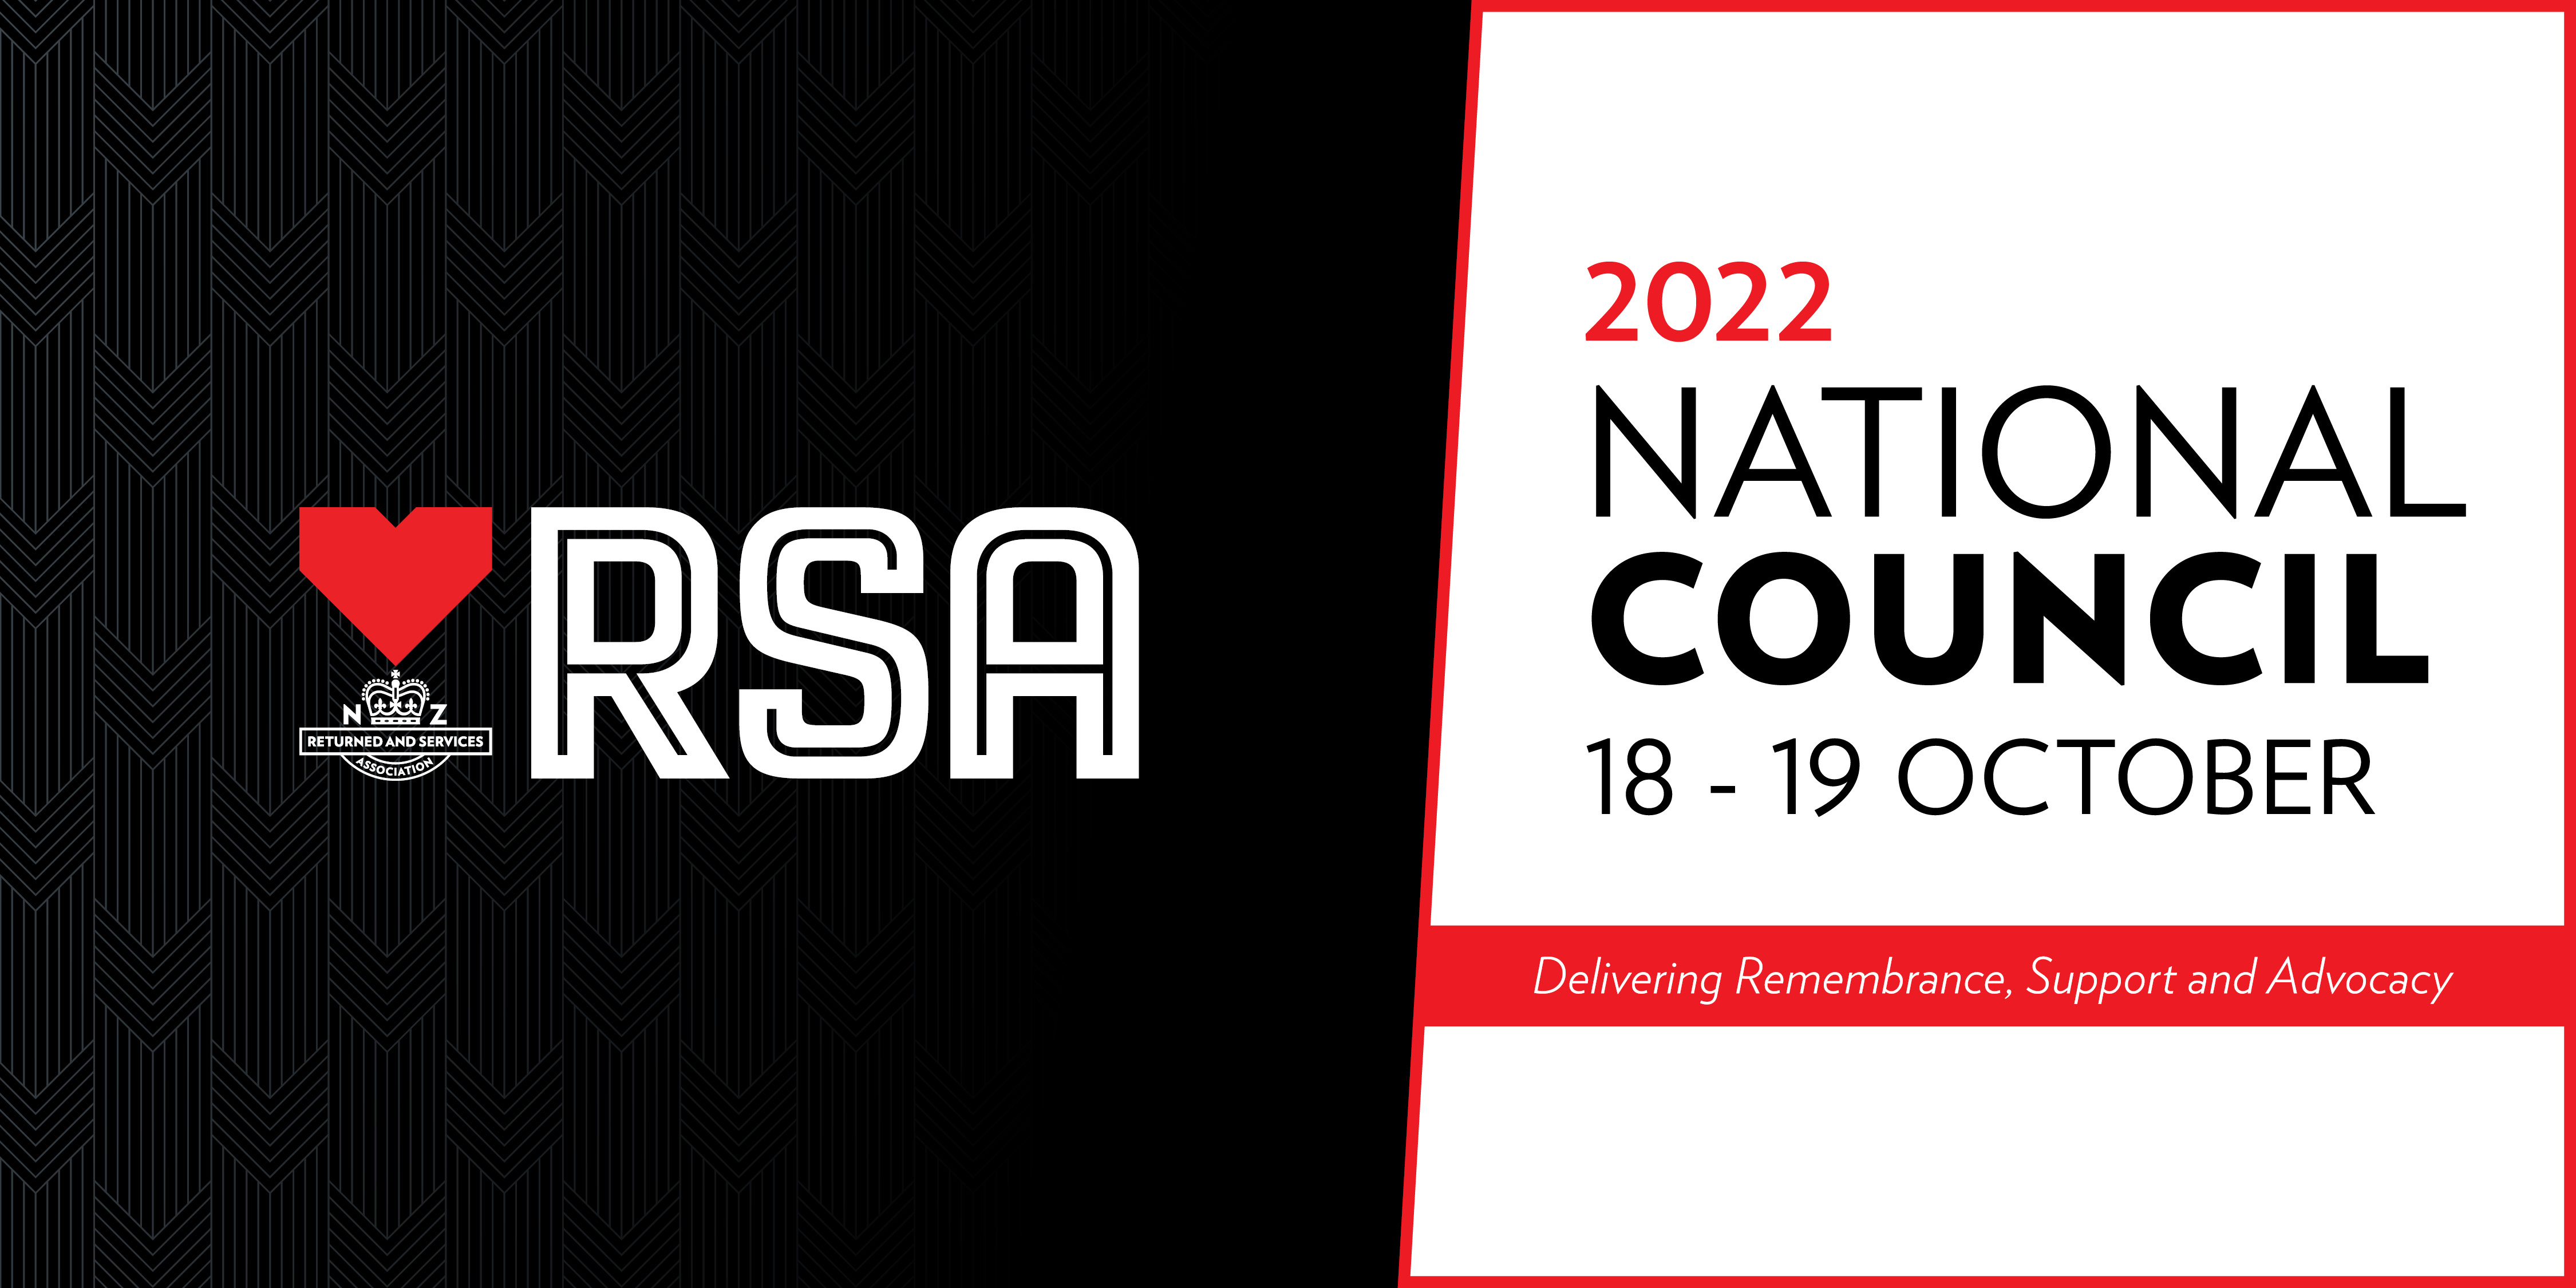 RSA National Council Image v2